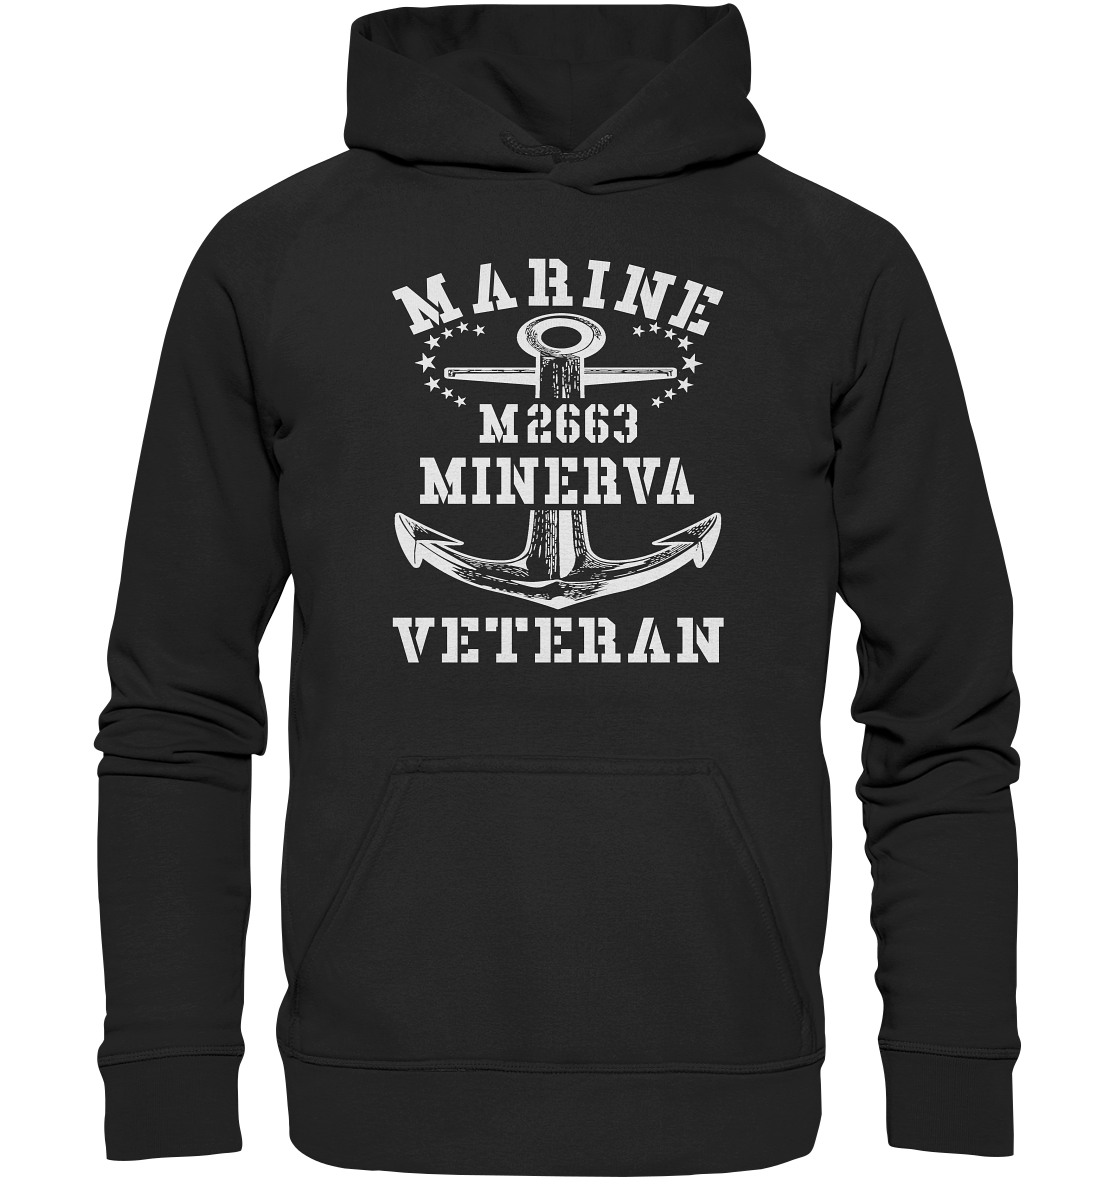 BiMi M2663 MINERVA Marine Veteran - Basic Unisex Hoodie